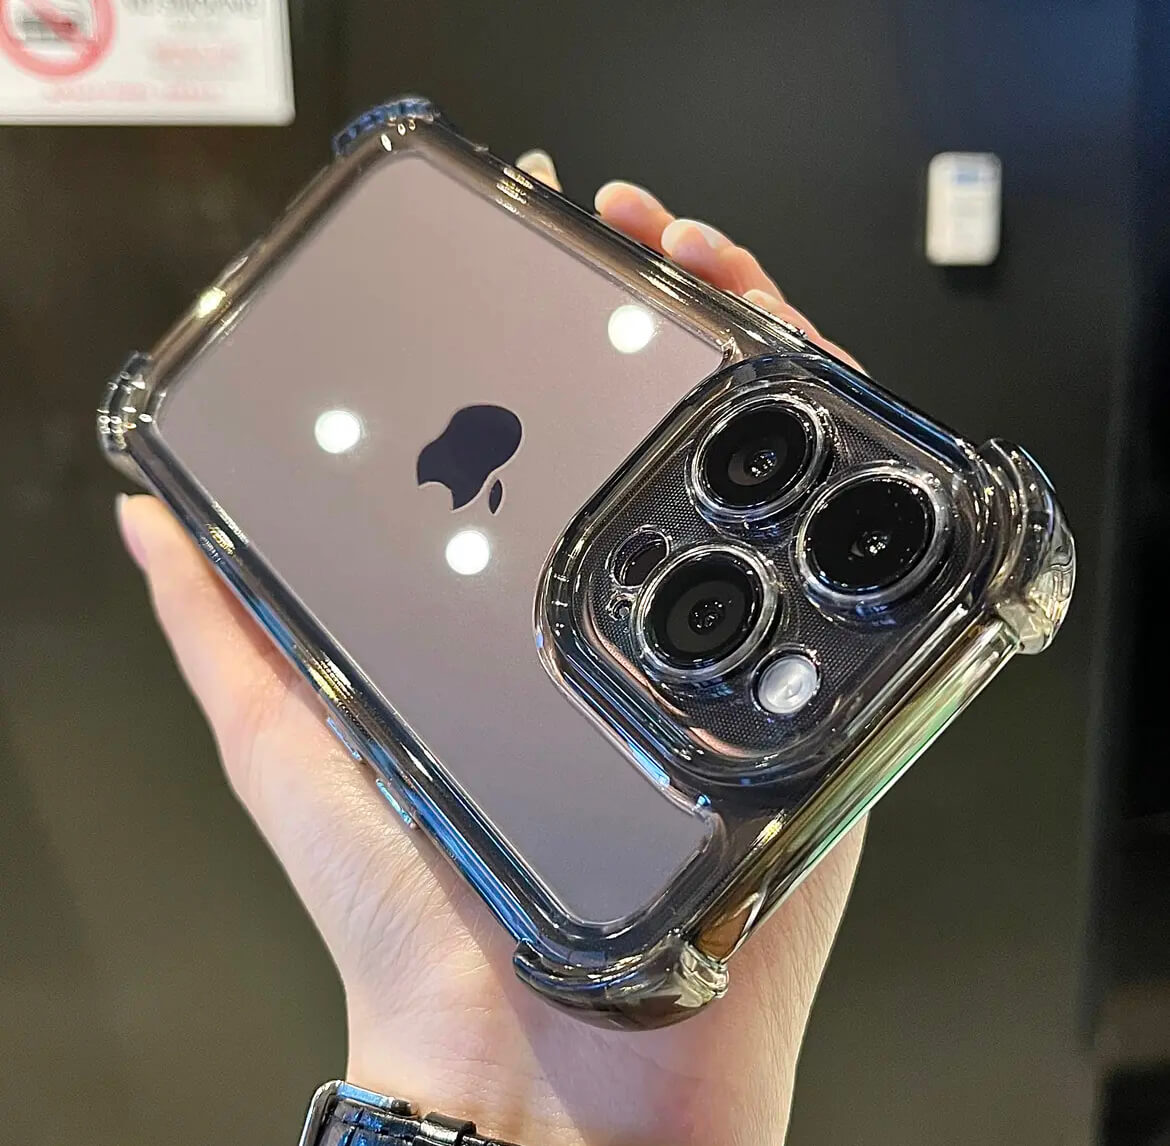 Transparent Four Corners Shockproof Phone Case Apple_Shopier